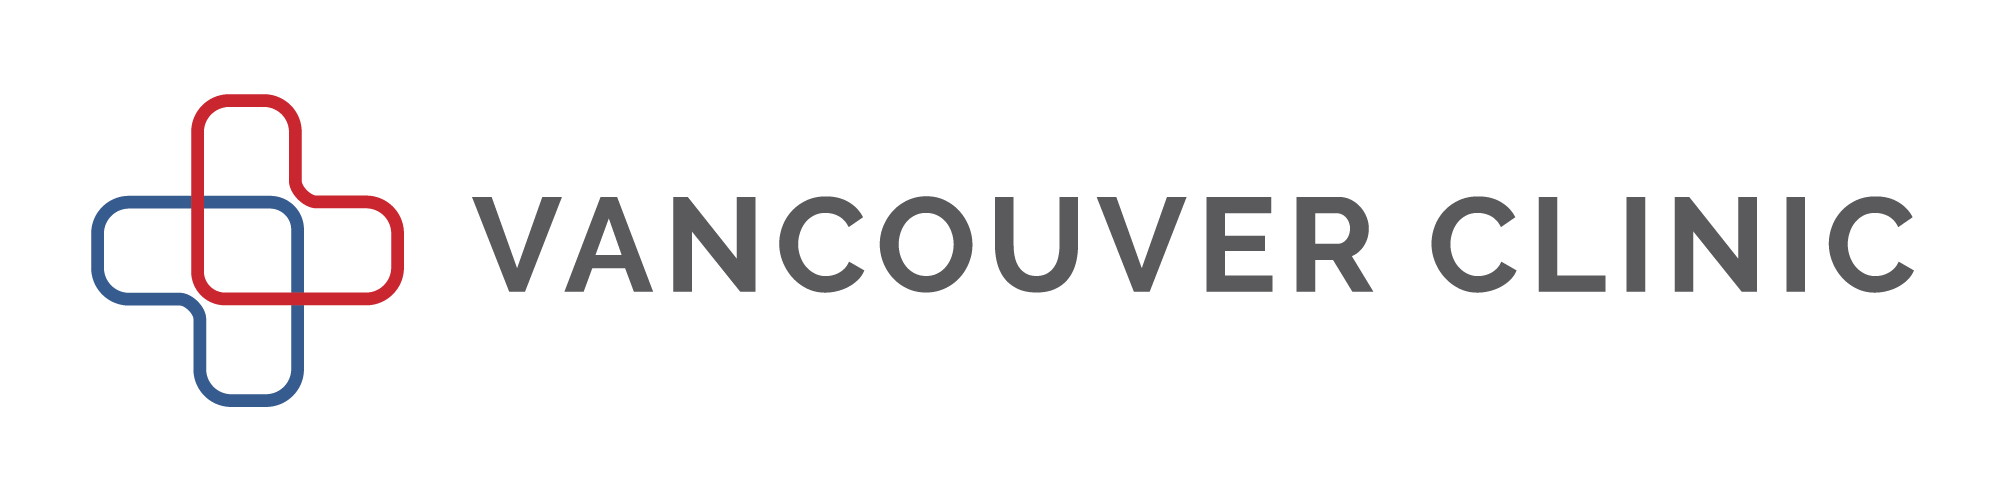 Vancouver Clinic logo